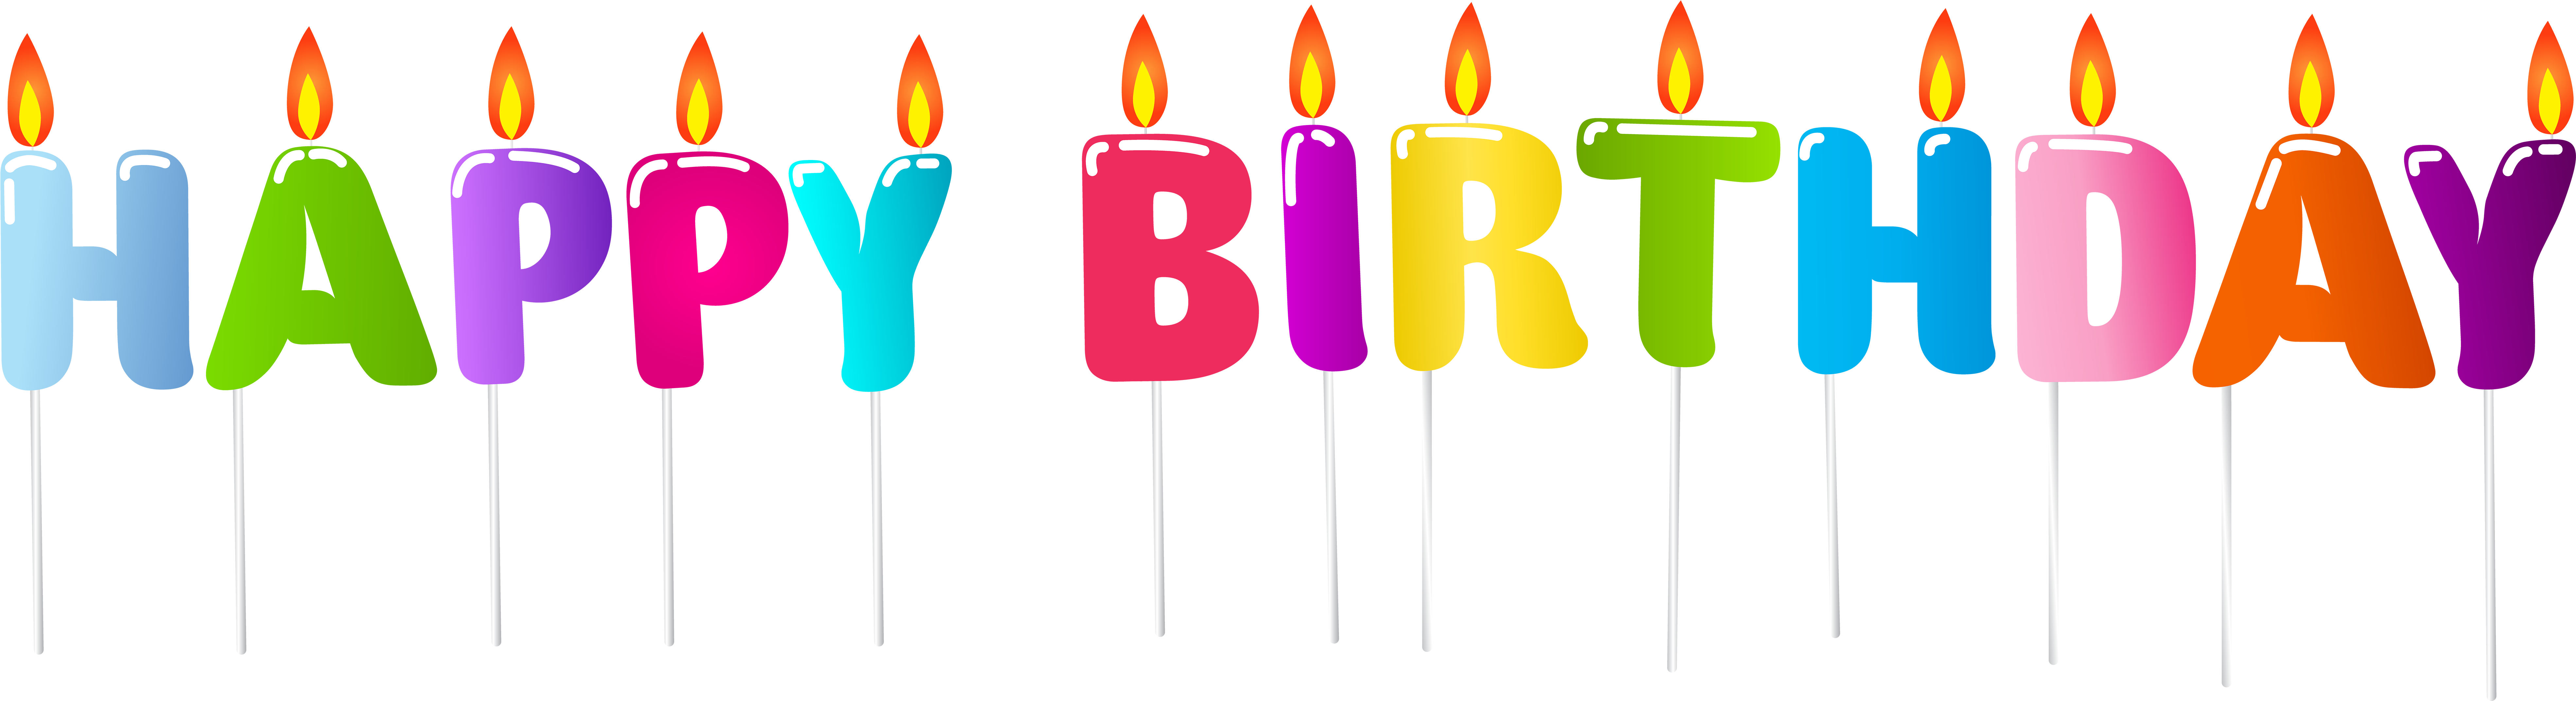 free-happy-birthday-banner-transparent-download-free-happy-birthday